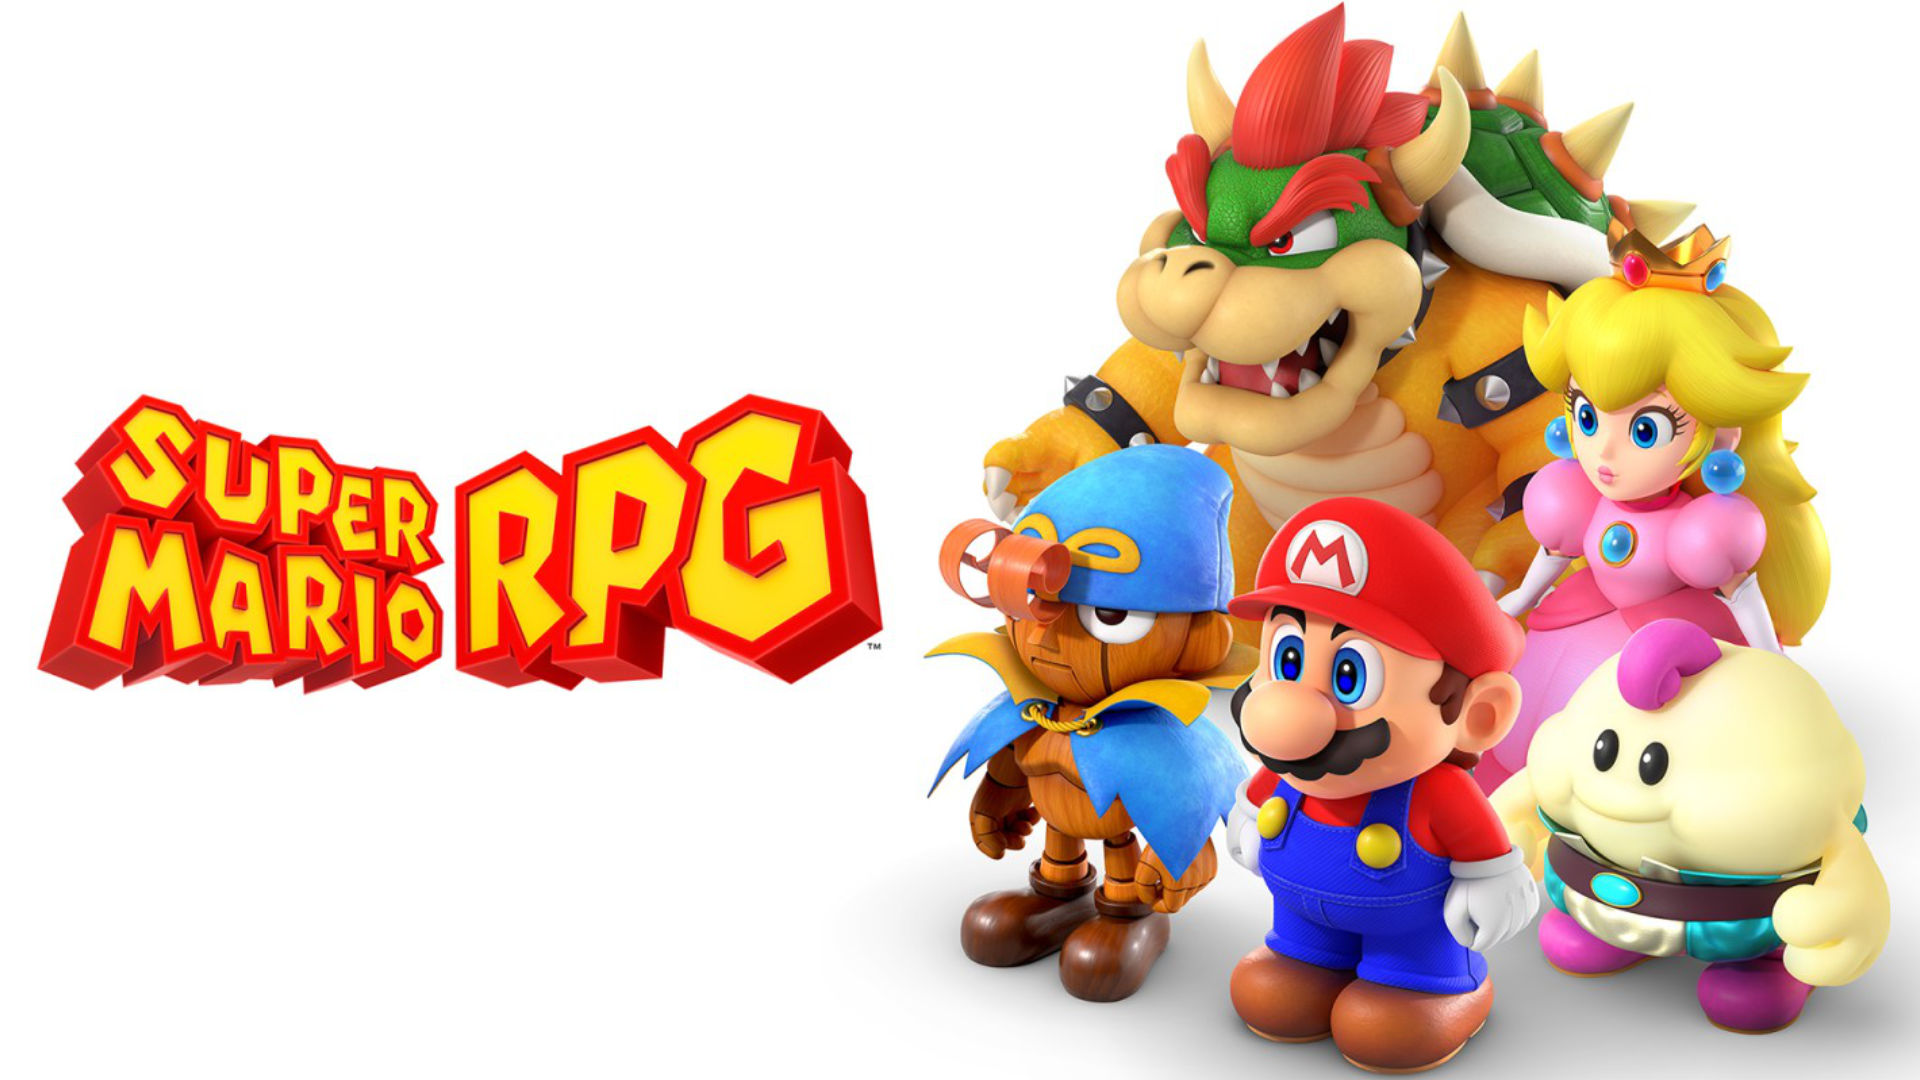 Super Mario RPG: SNES-Klassiker bekommt ein Remake spendiert